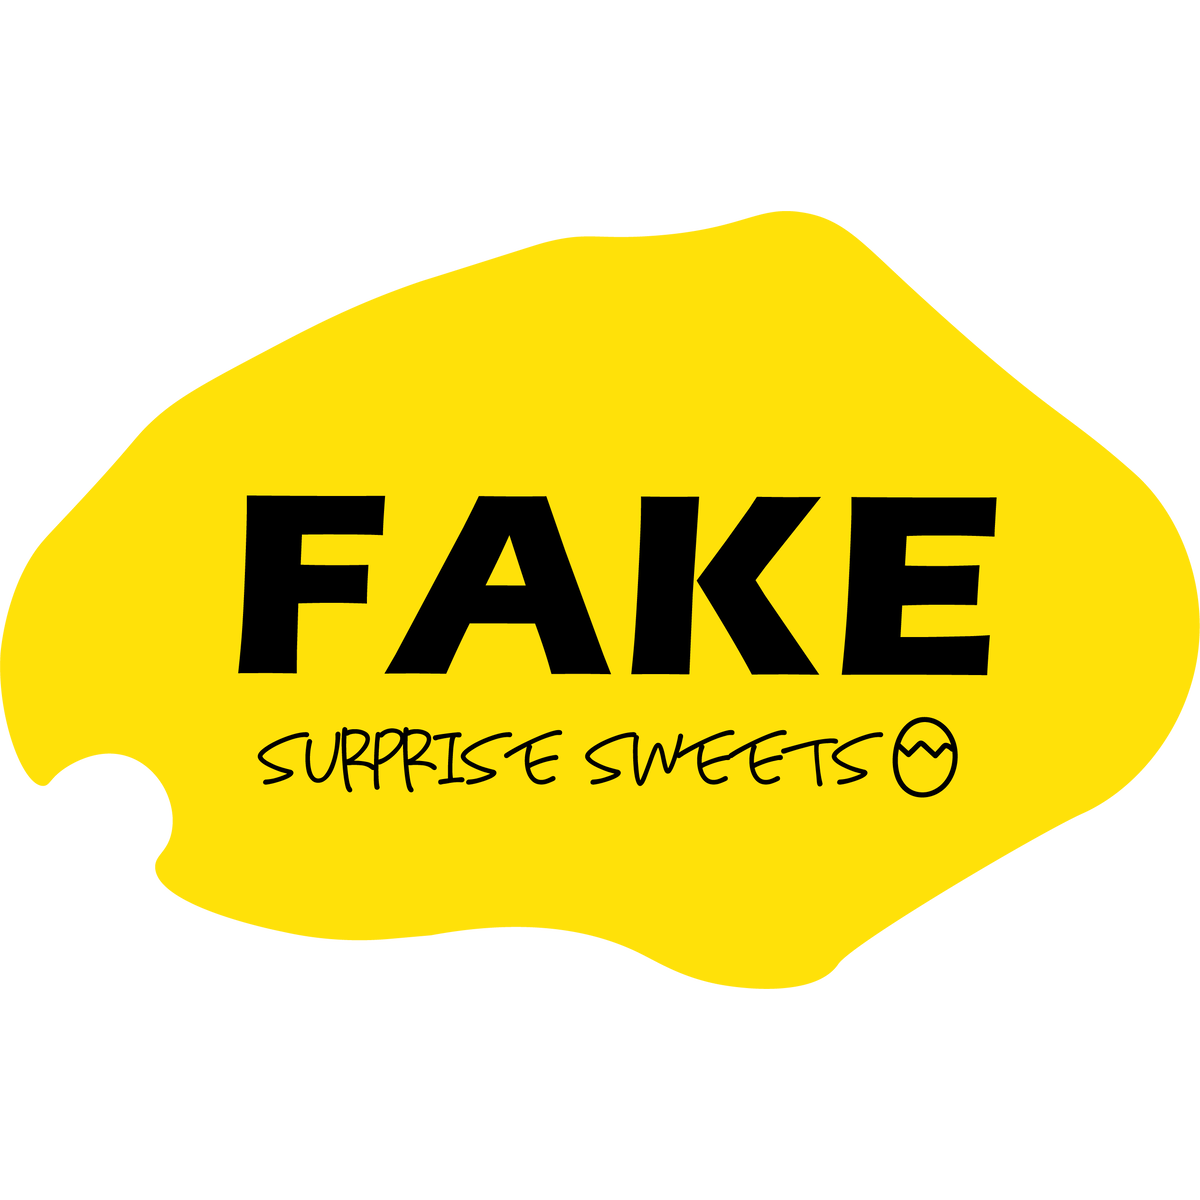 FAKEsurprisesweets  チーズケーキ・エッグタルト・そっくりスイーツのお店 powered by BASE